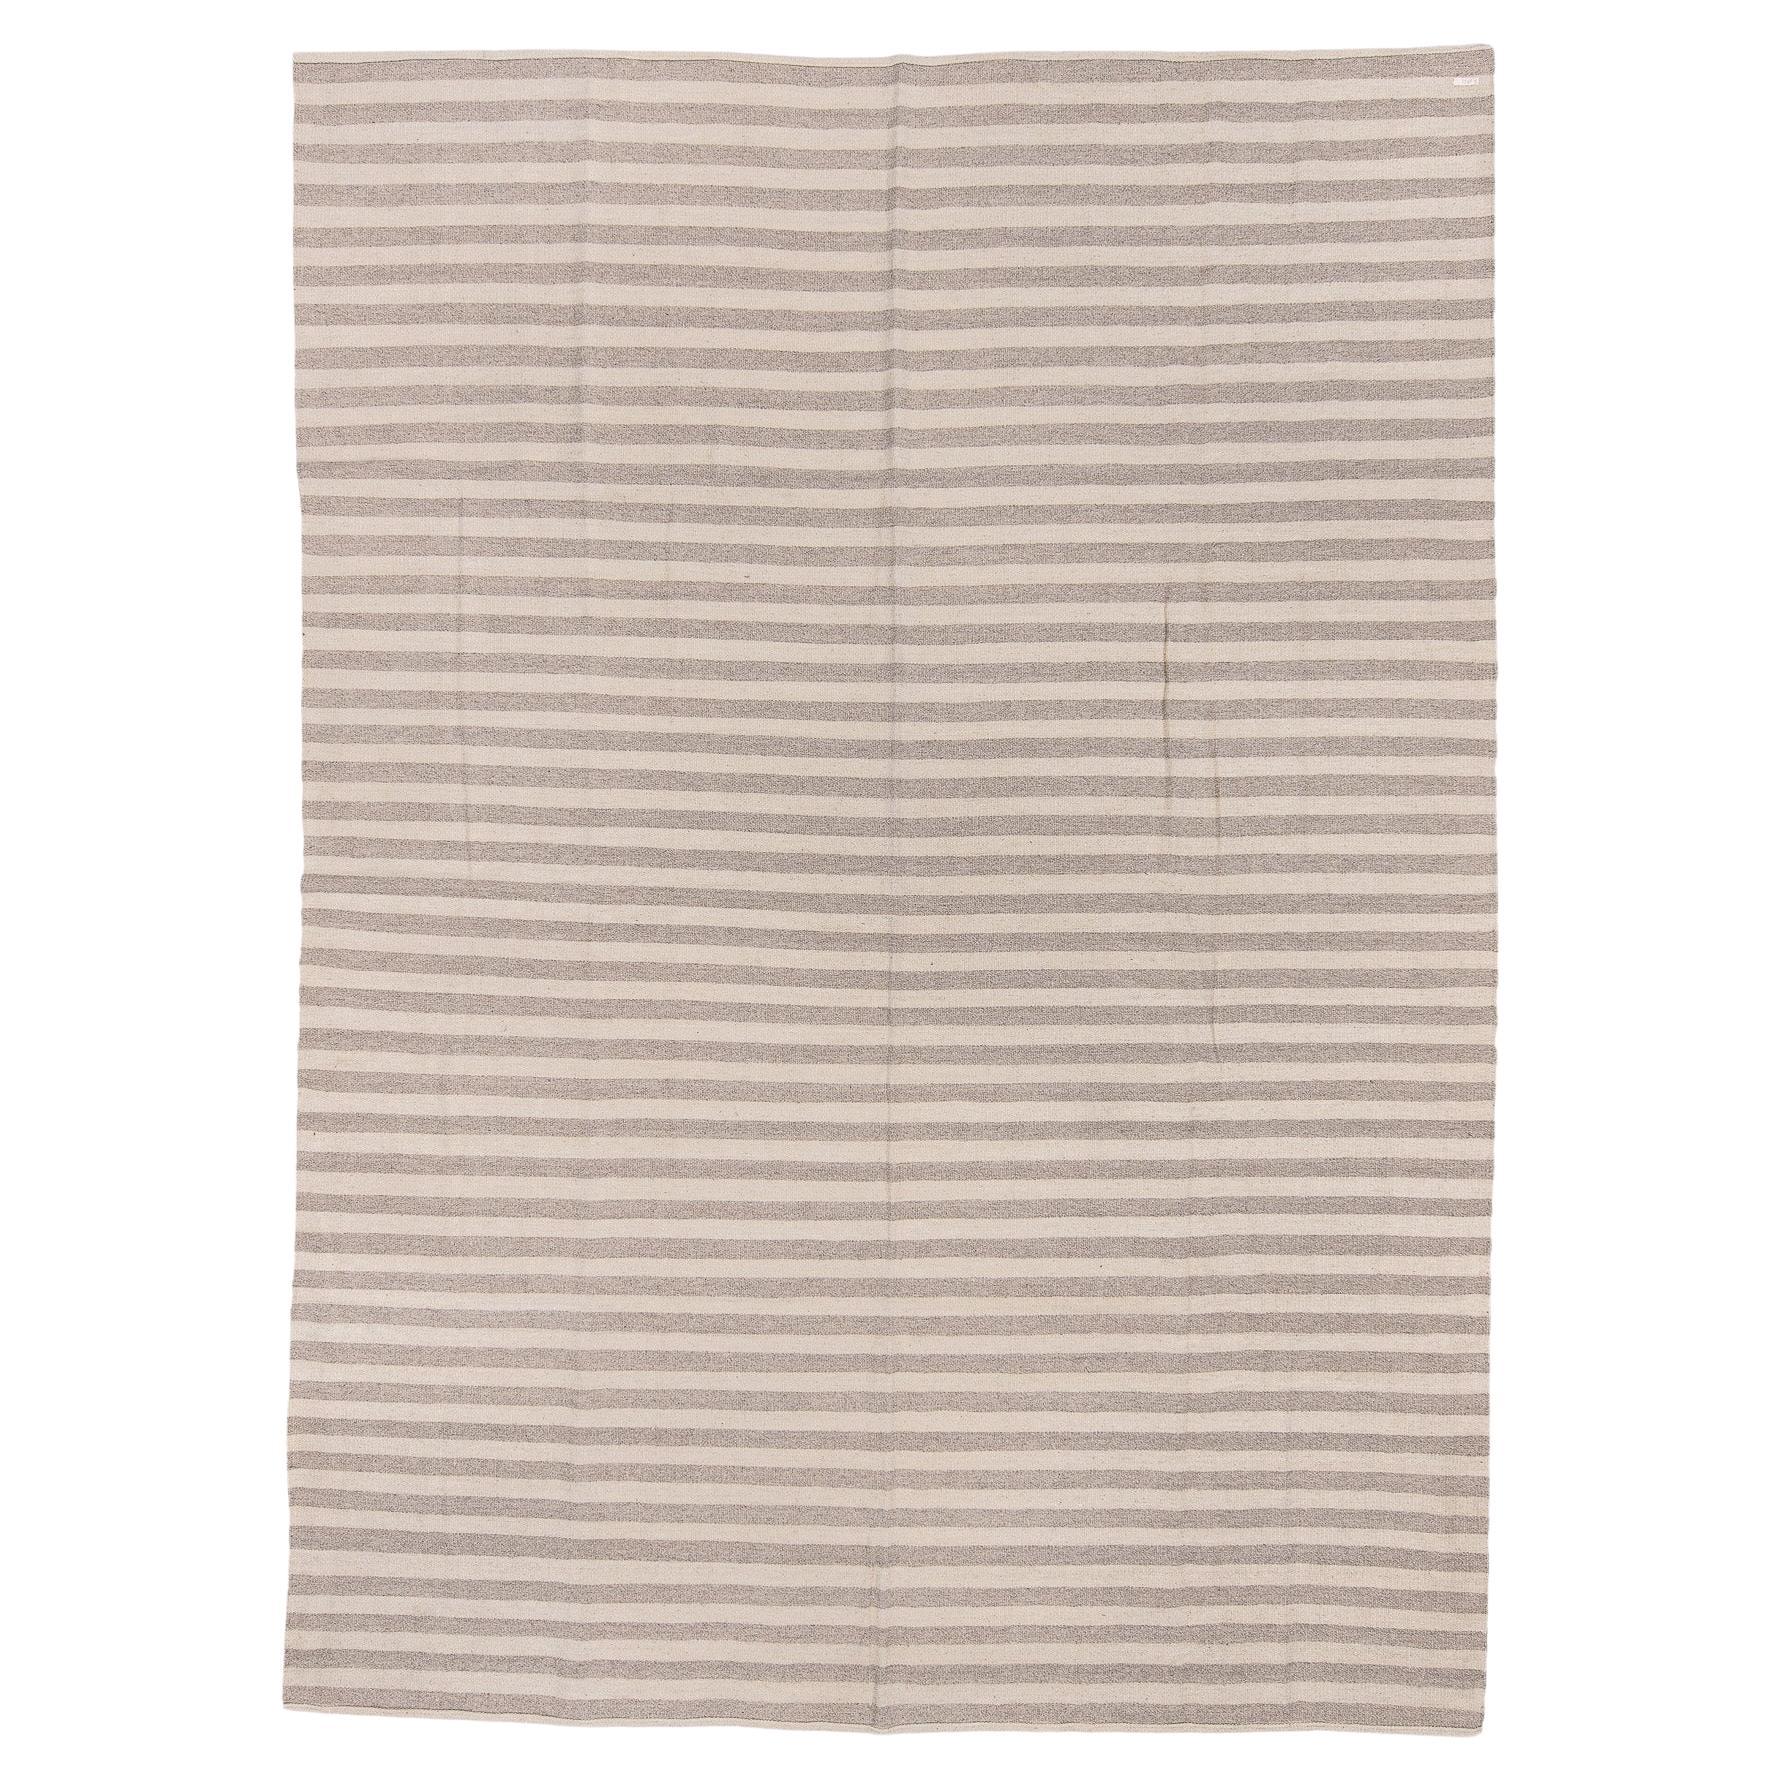 Tight Striped Linen Look Kilim For Sale